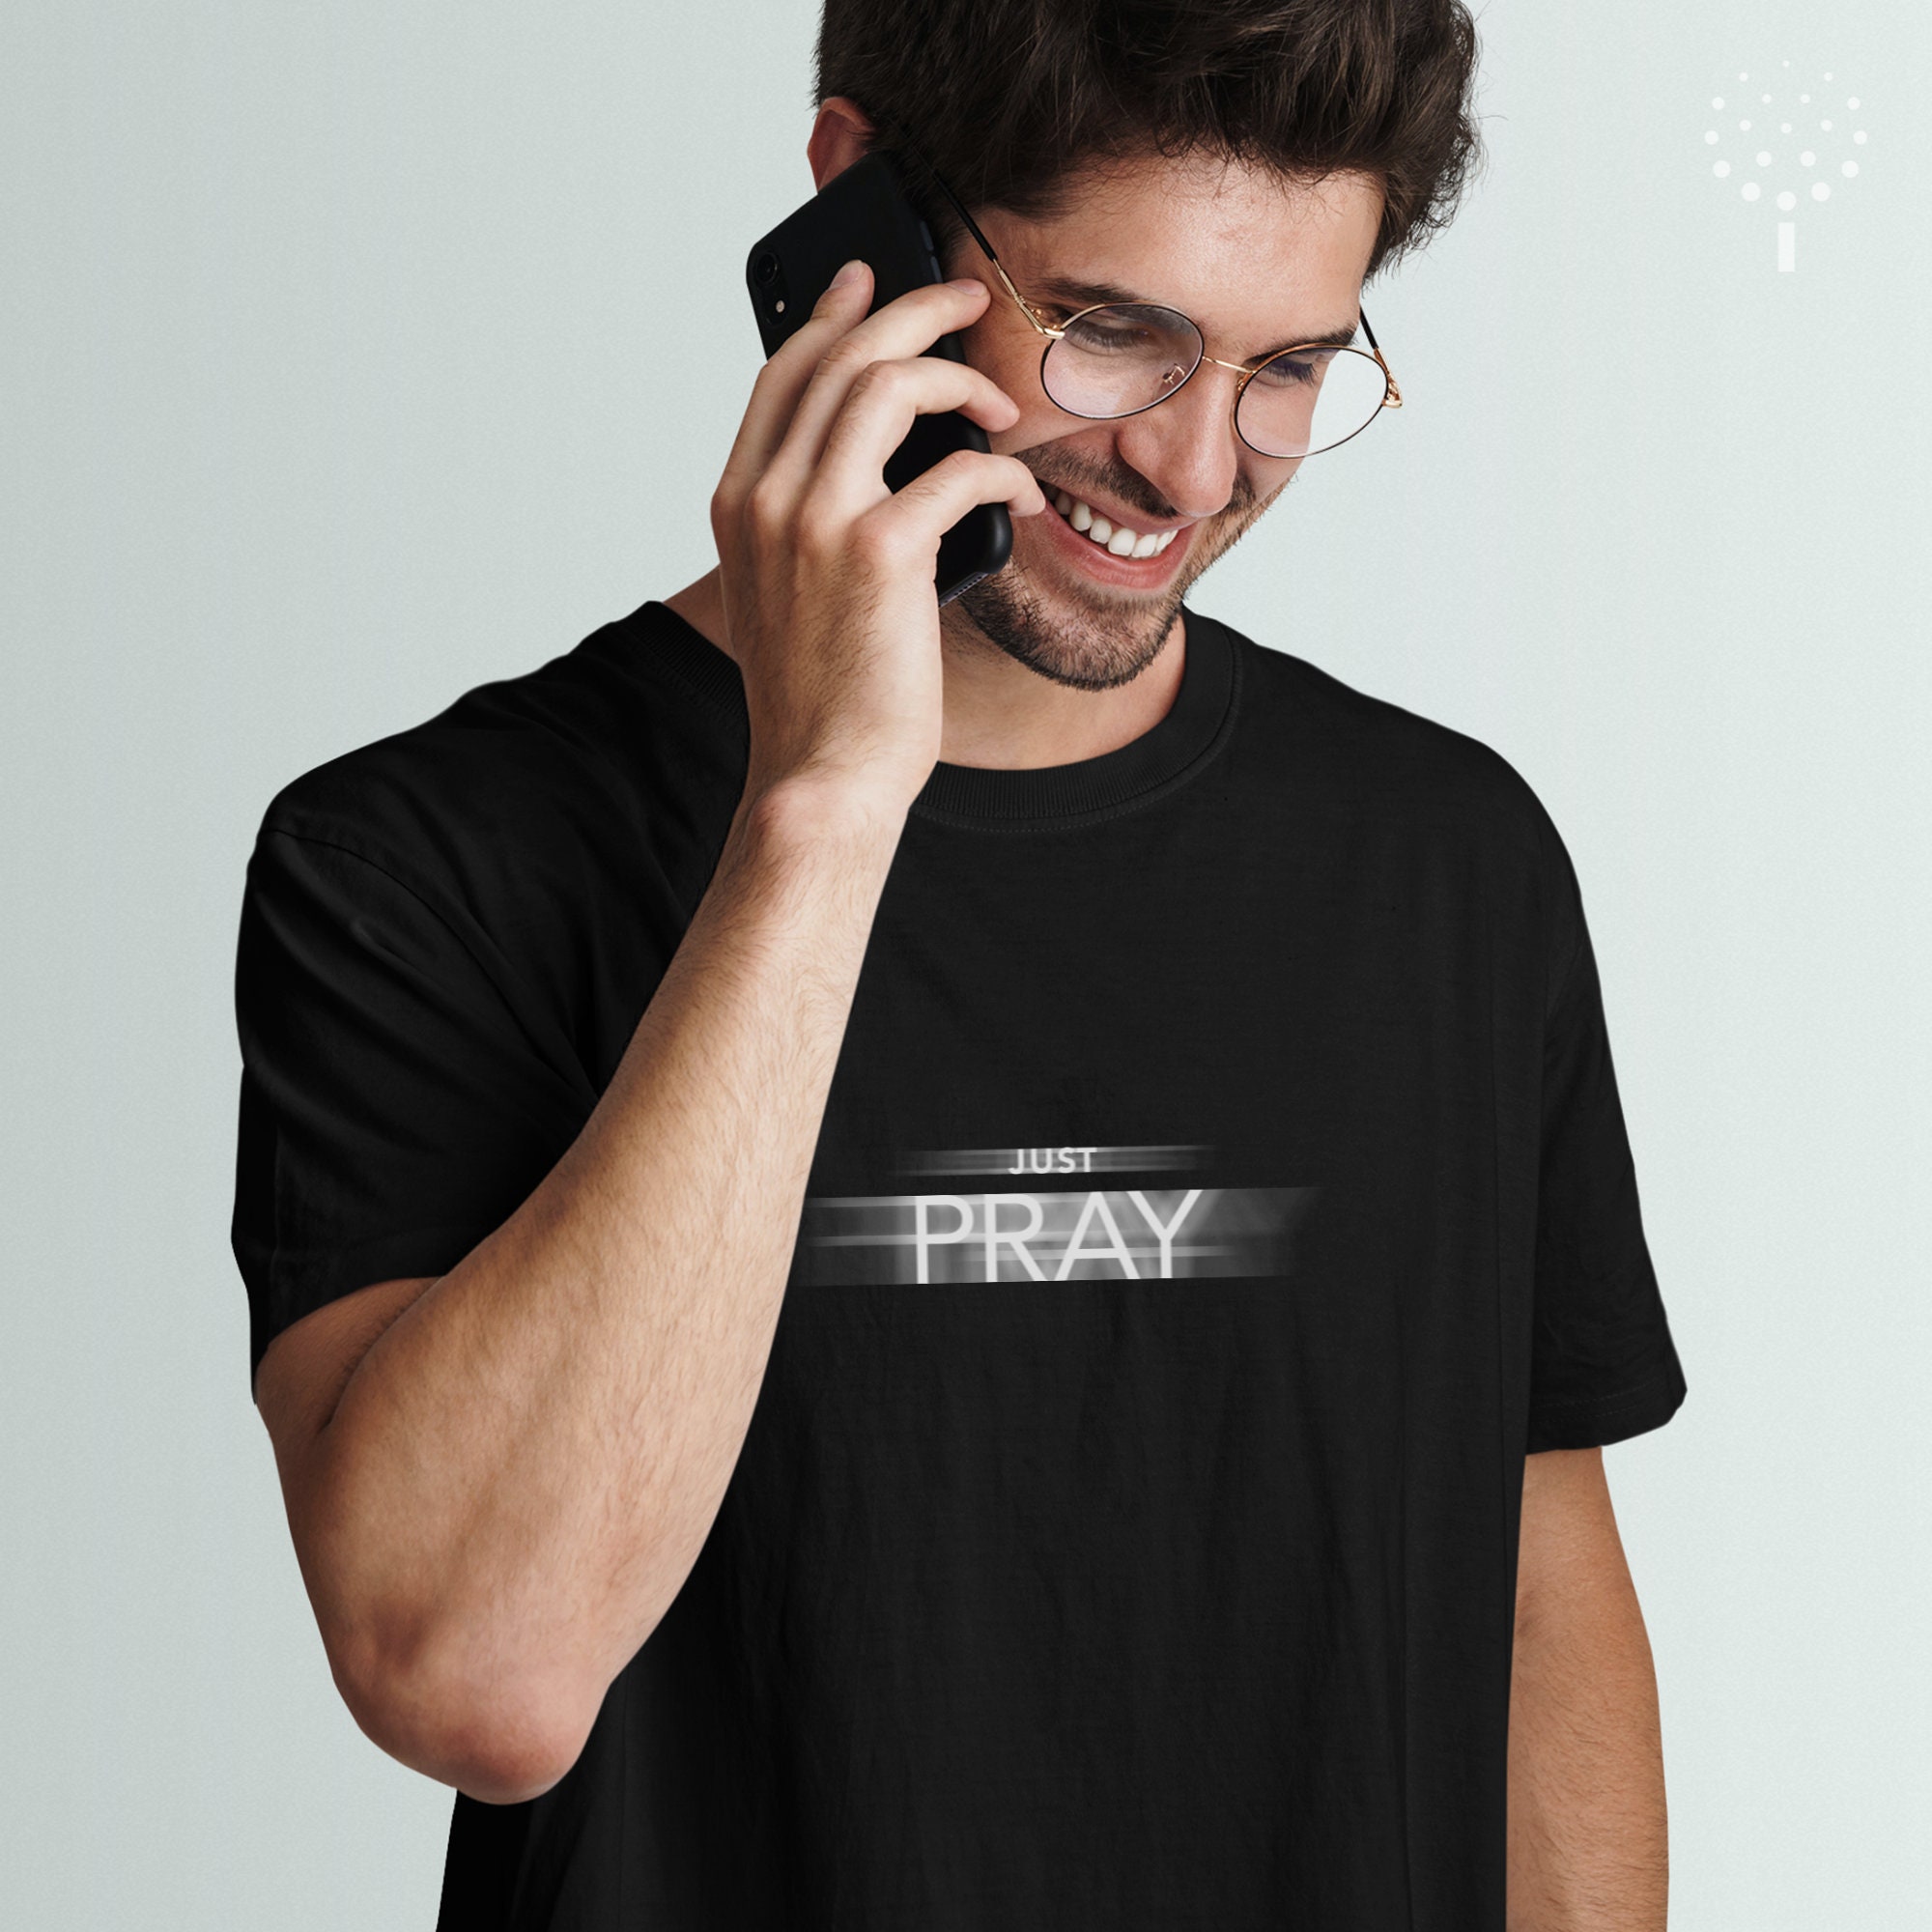 Just Pray Minimalist Christian Graphic Shirts Blurred Type - Etsy